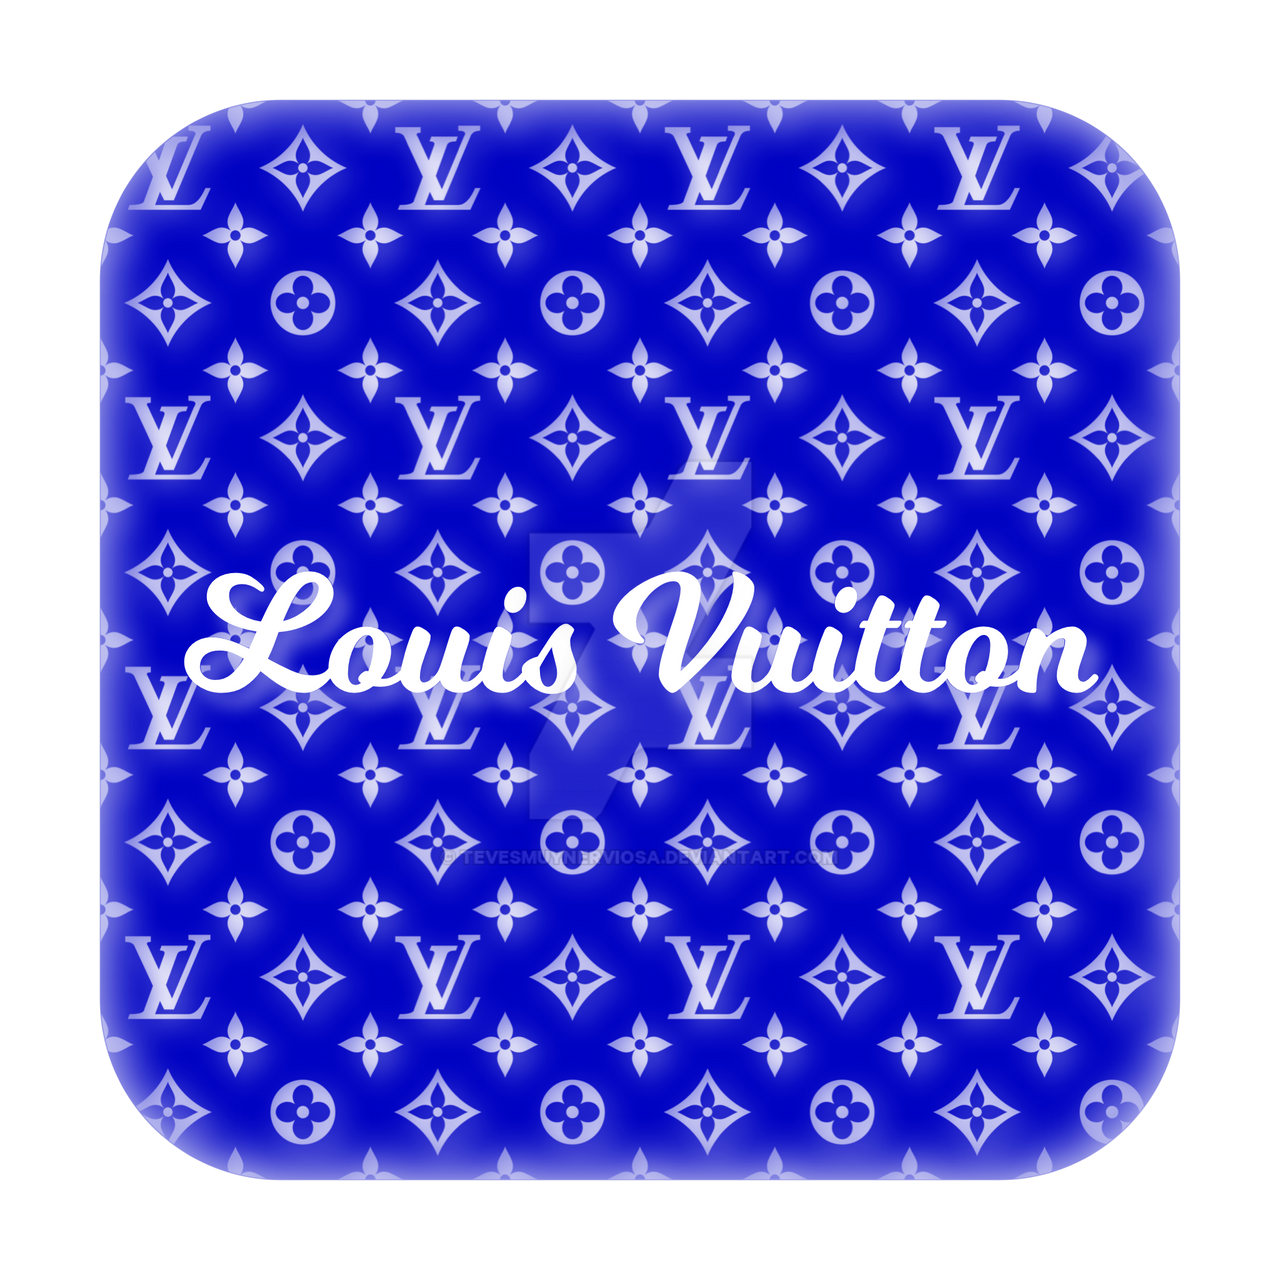 Louis Vuitton Wallpaper by TeVesMuyNerviosa on DeviantArt